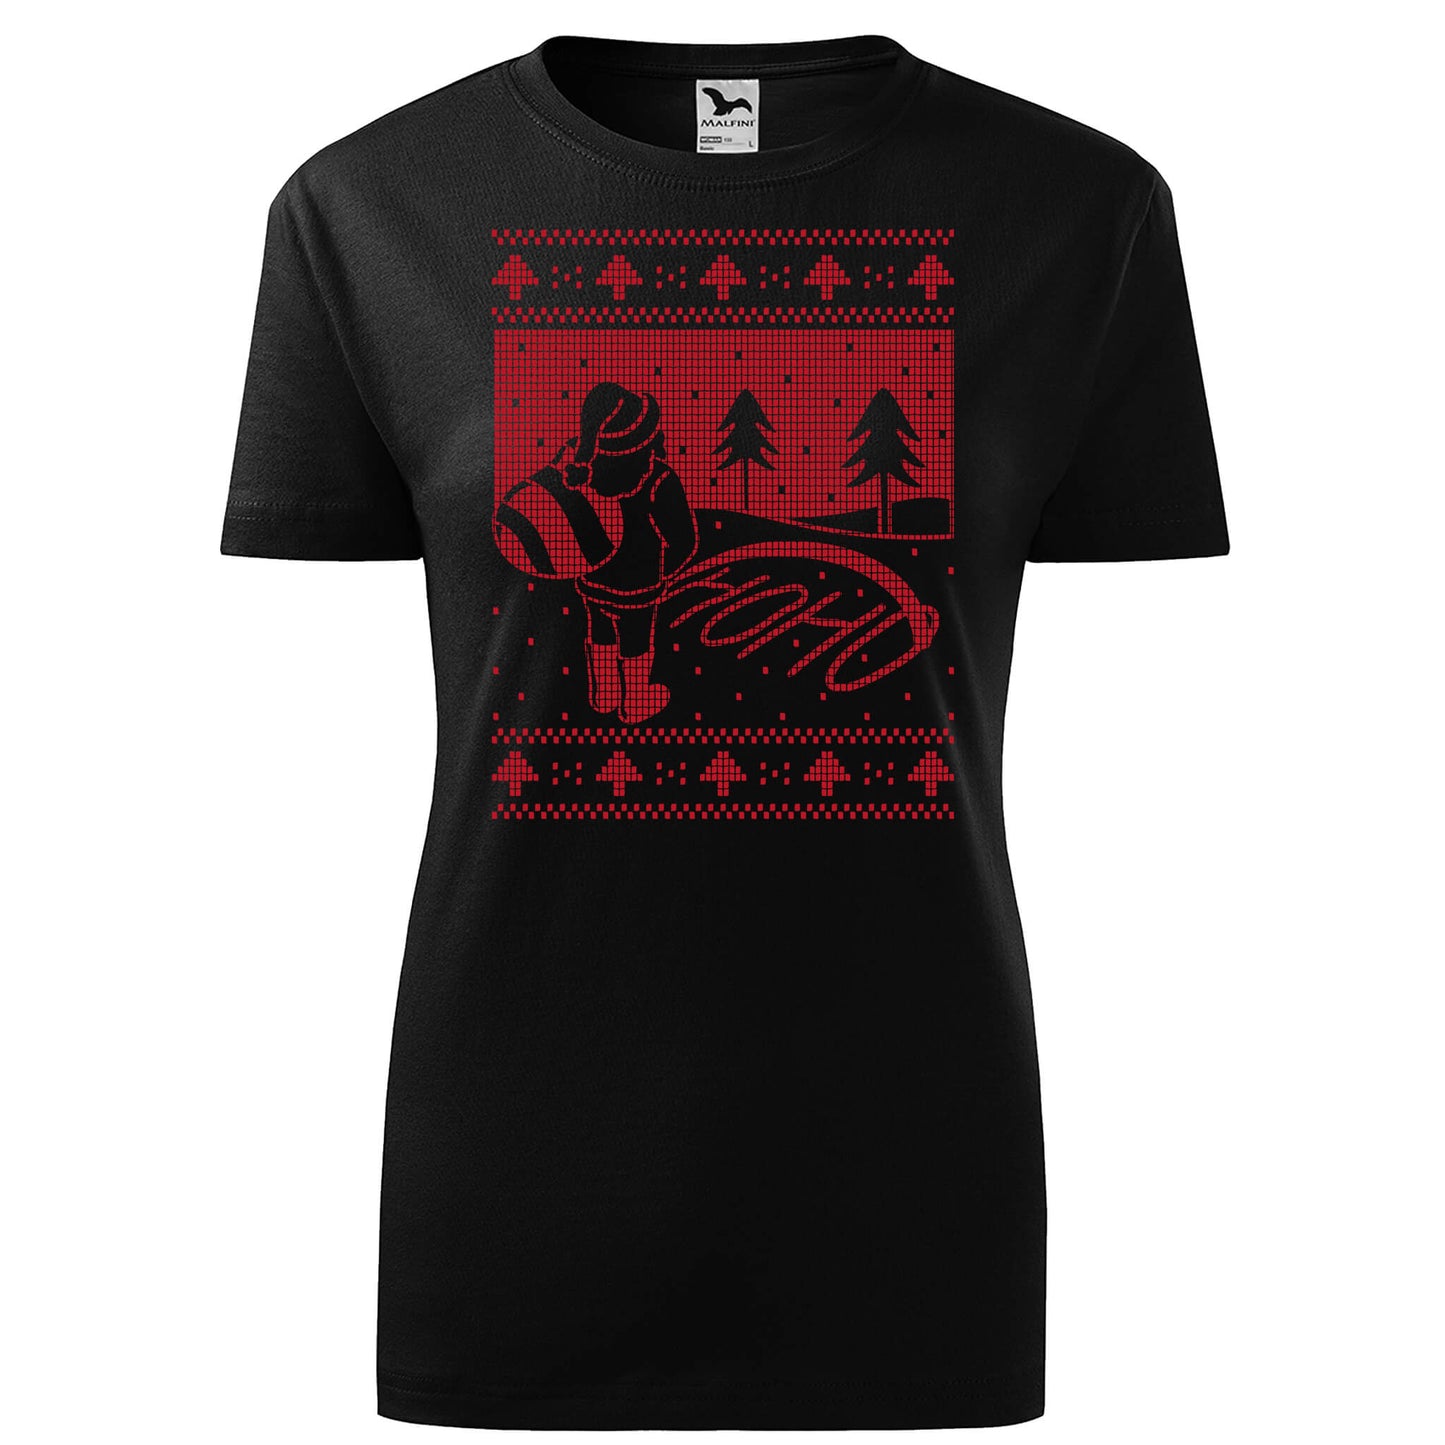 Santa ugly sweater t-shirt - rvdesignprint